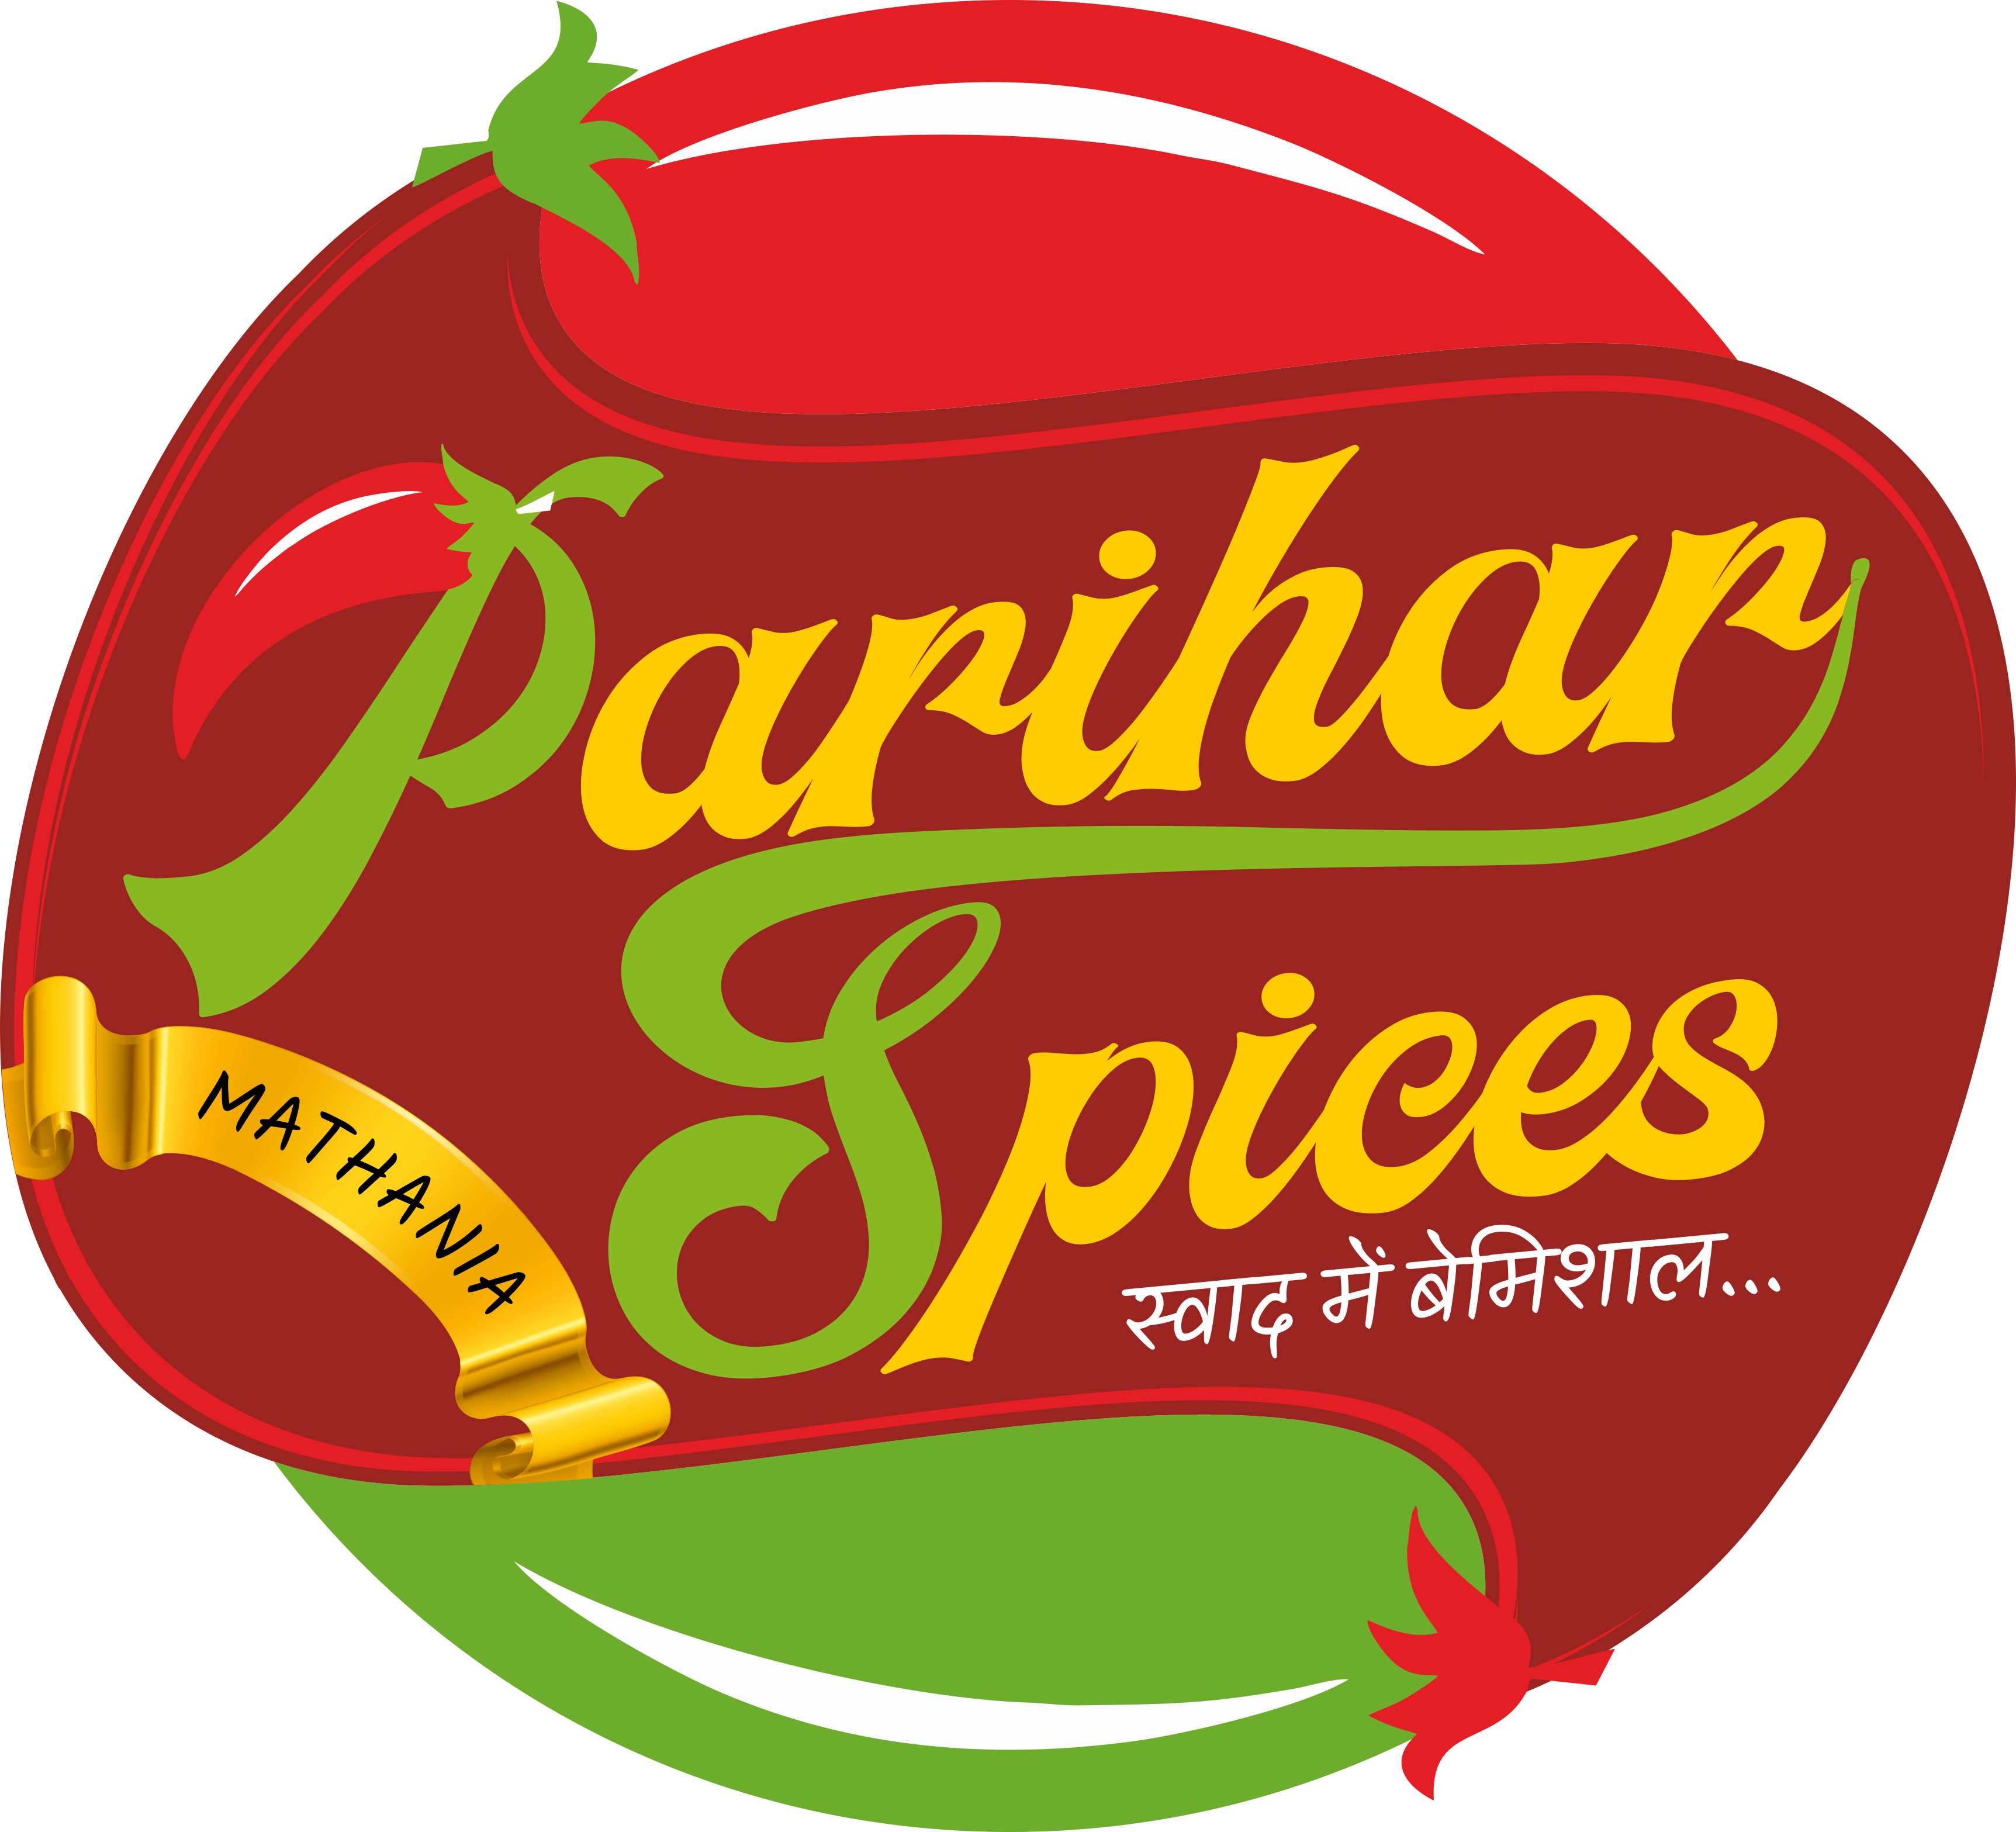 Parihar_Spices